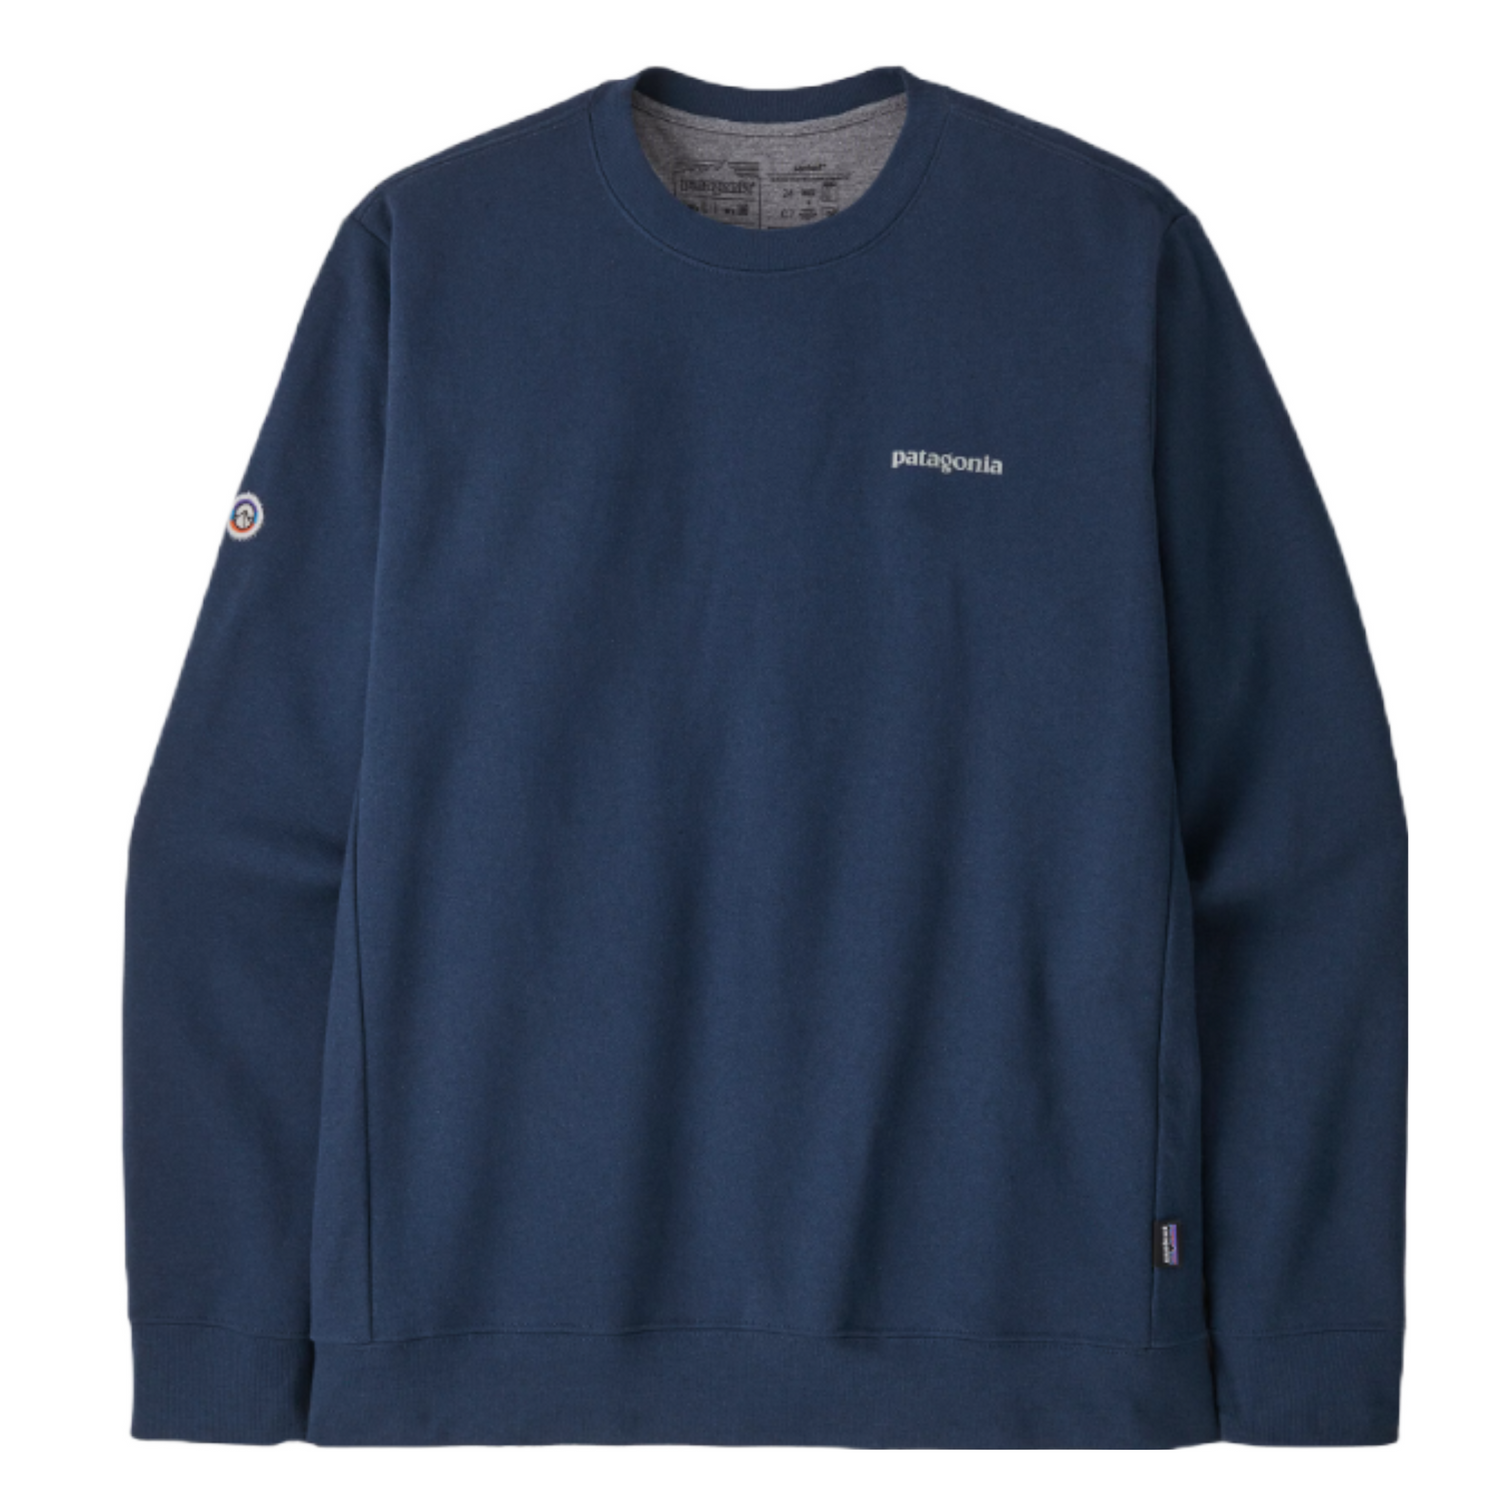 Patagonia Men's Fitz Roy Icon Uprisal Crew Sweatshirt in blue